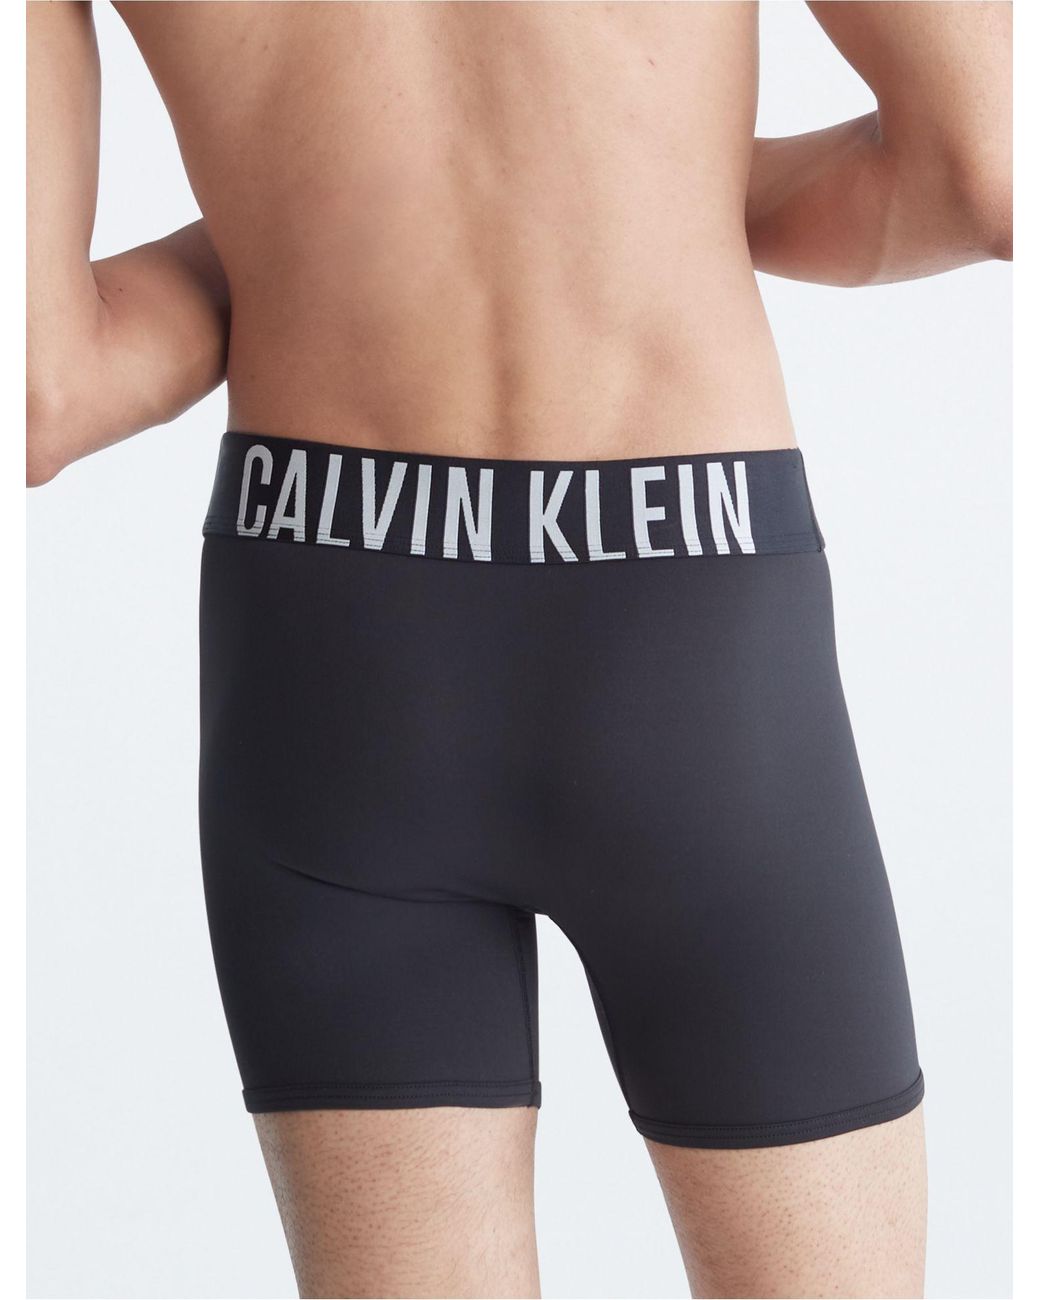 Calvin Klein Men's Intense Power Micro 3-Pack Boxer Brief - Black - XL